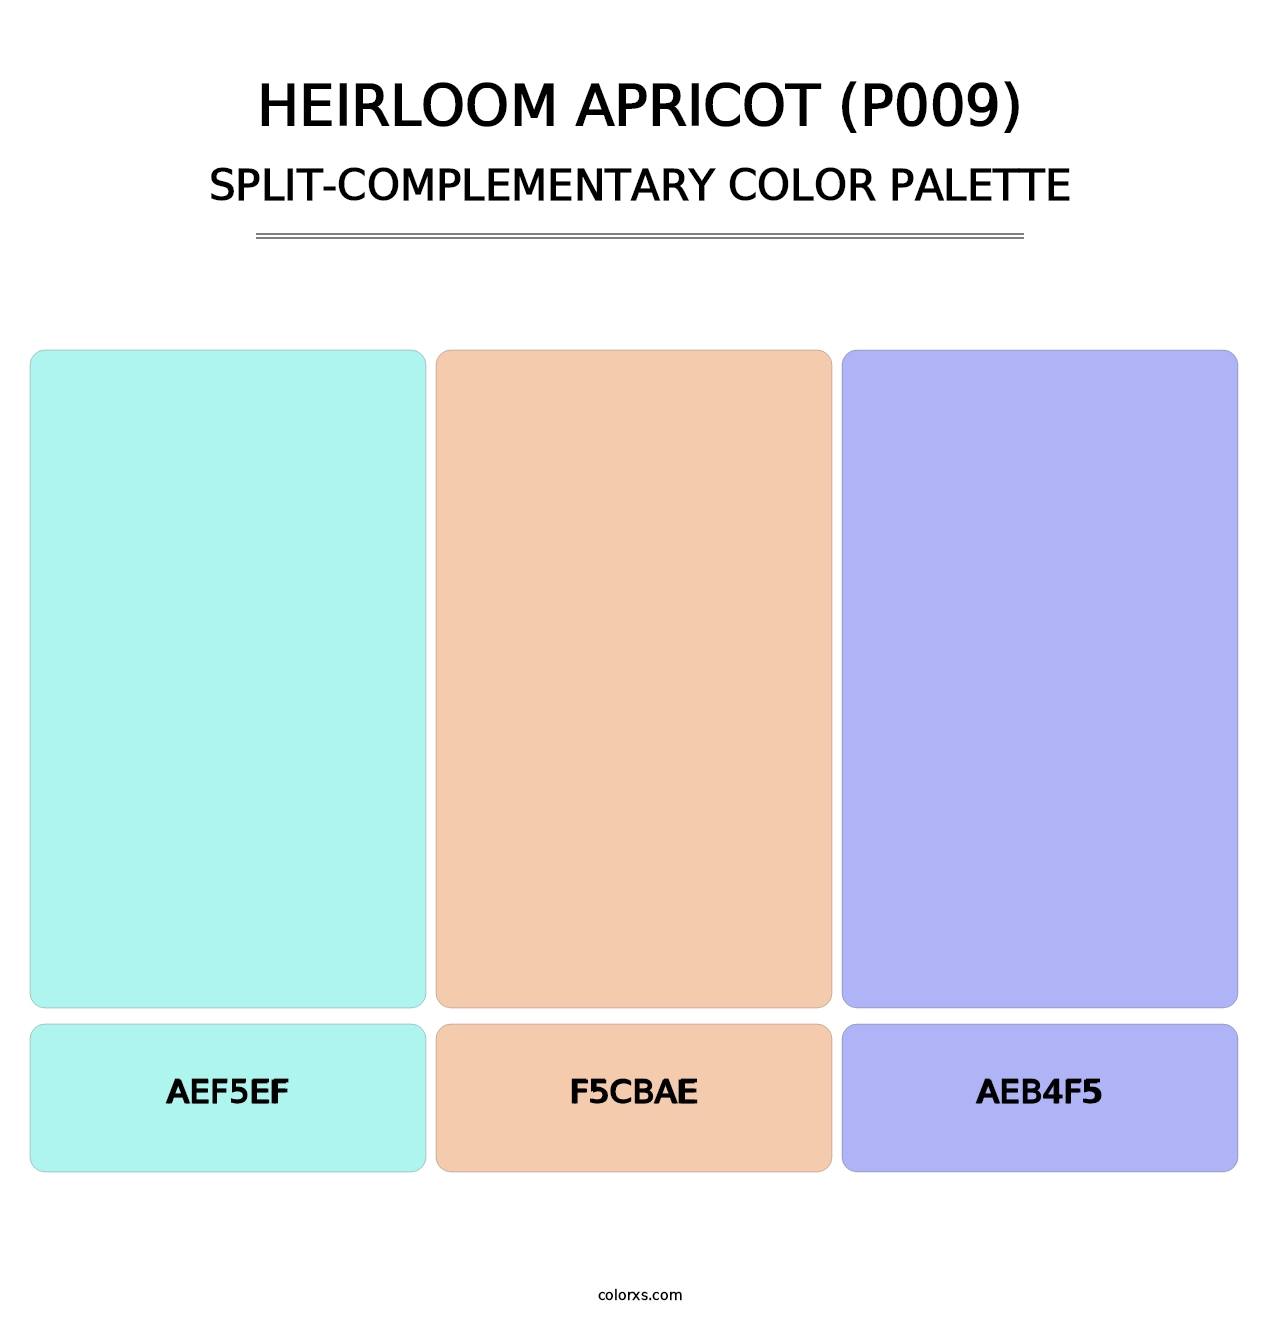 Heirloom Apricot (P009) - Split-Complementary Color Palette